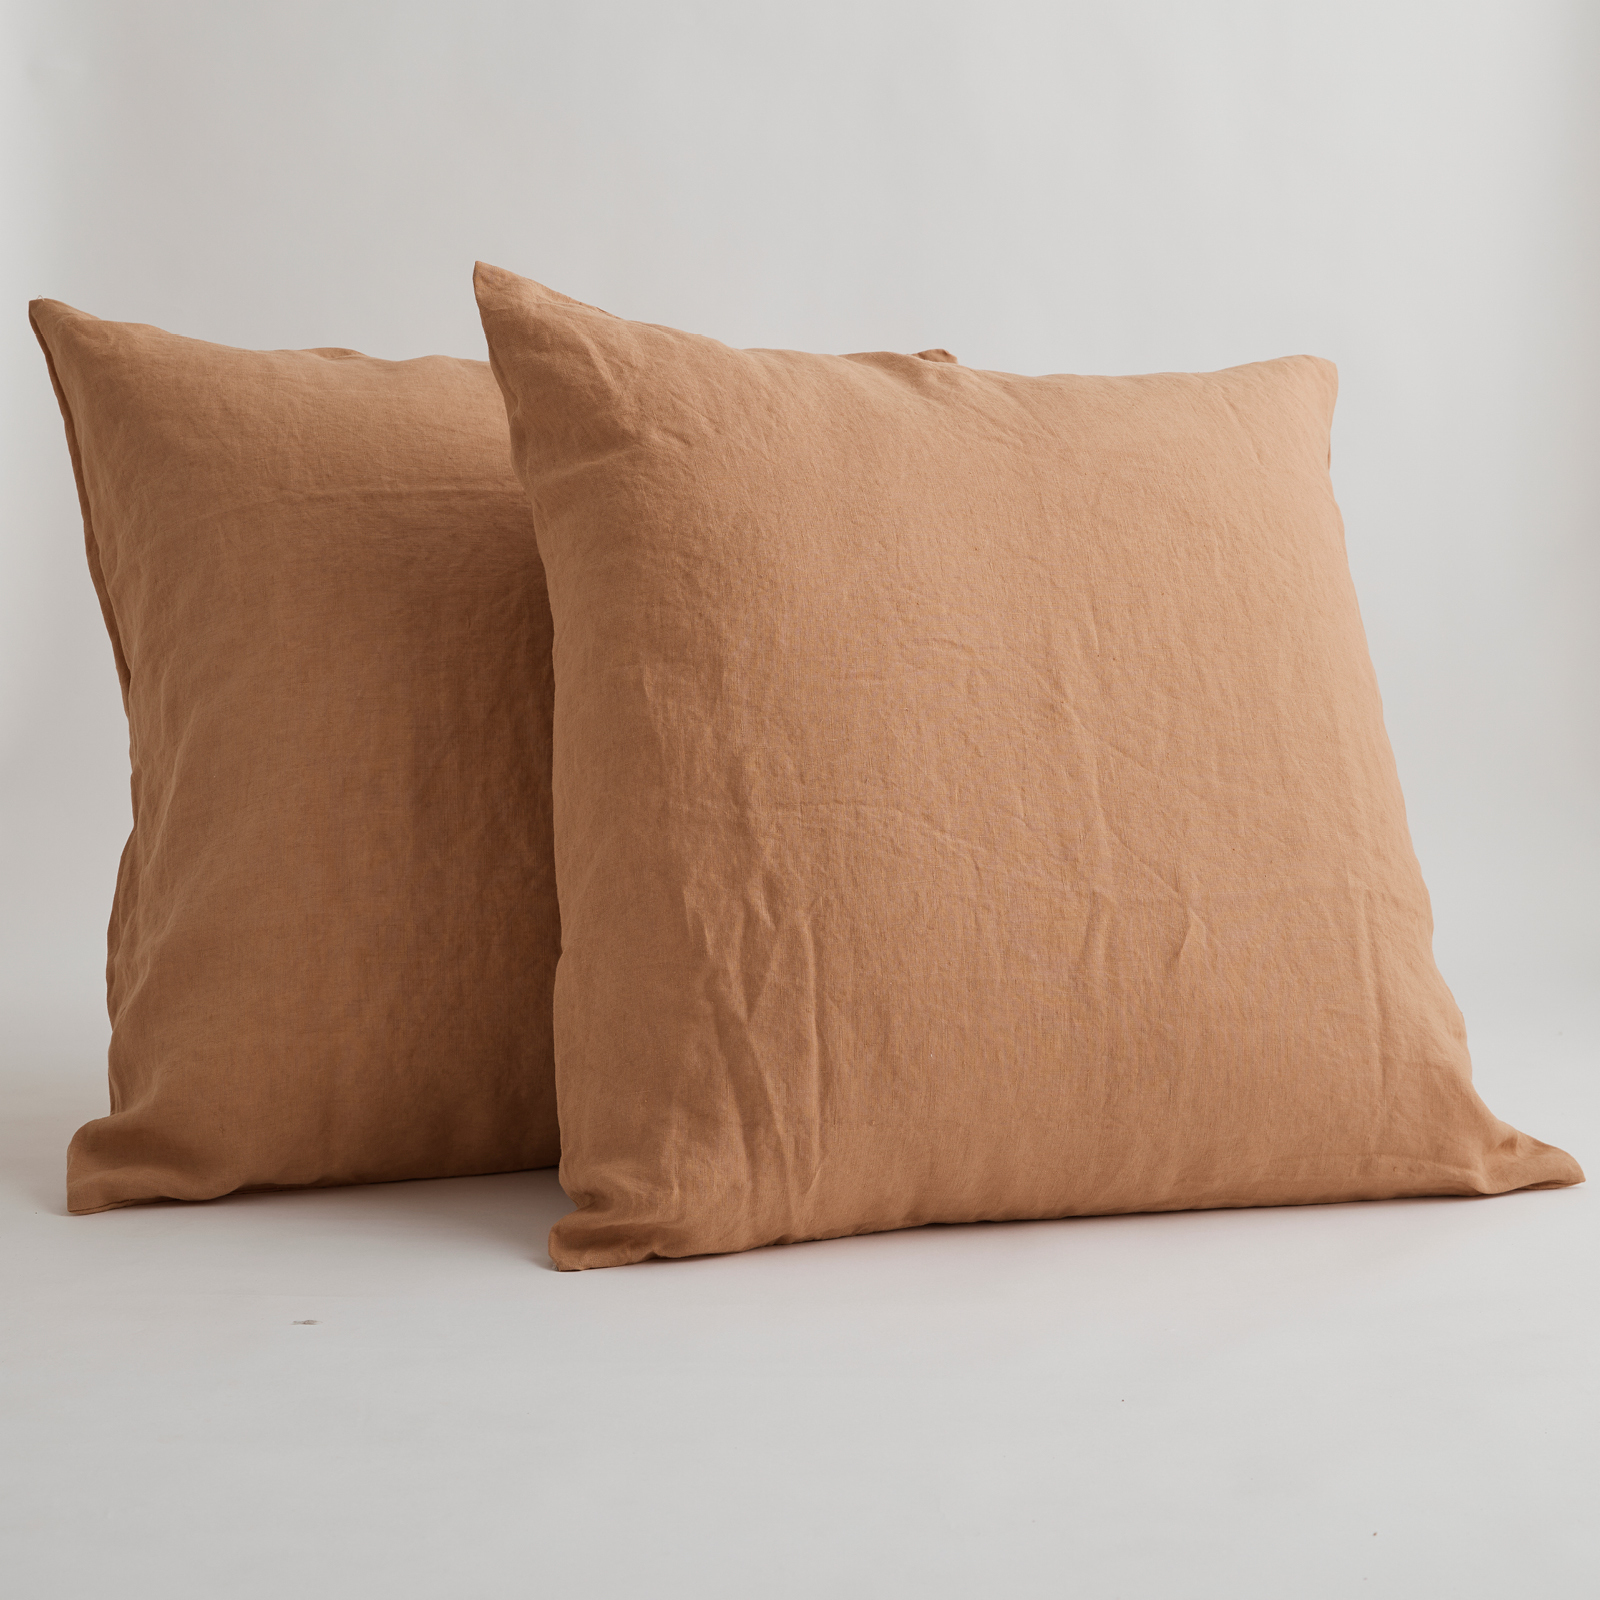 100% Pure Linen European Pillowcase Set in Sandalwood (2)